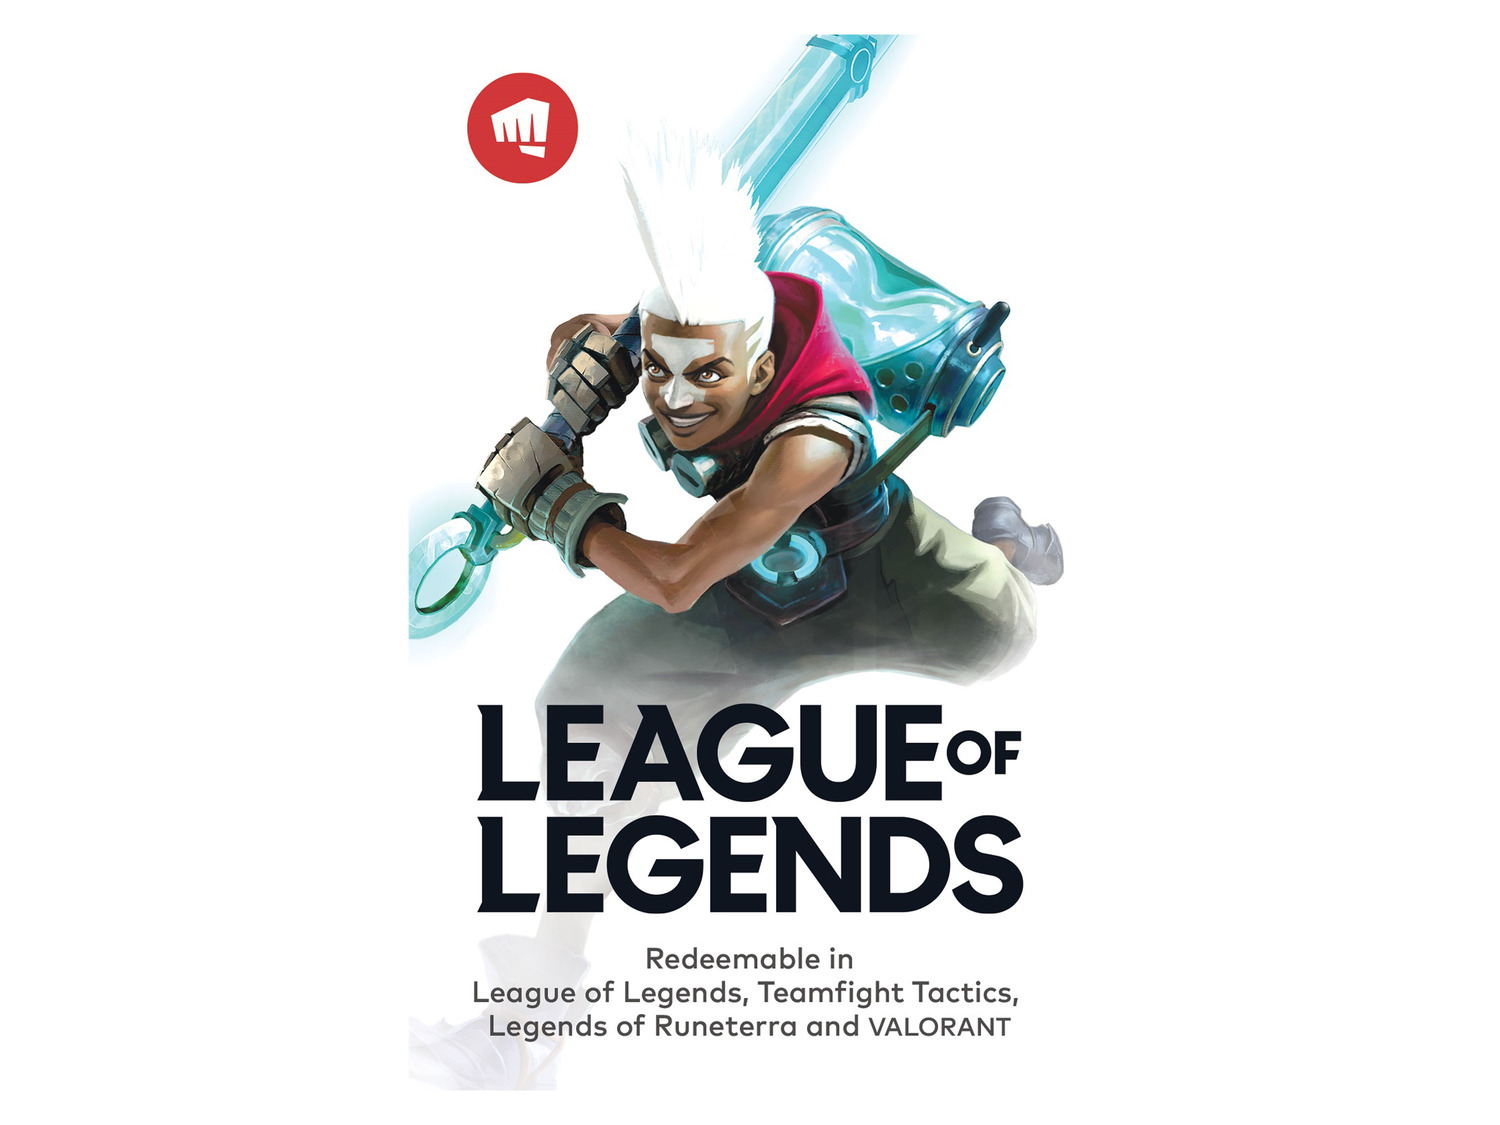 Riot Legends Digital 10 Code of | LIDL Euro League